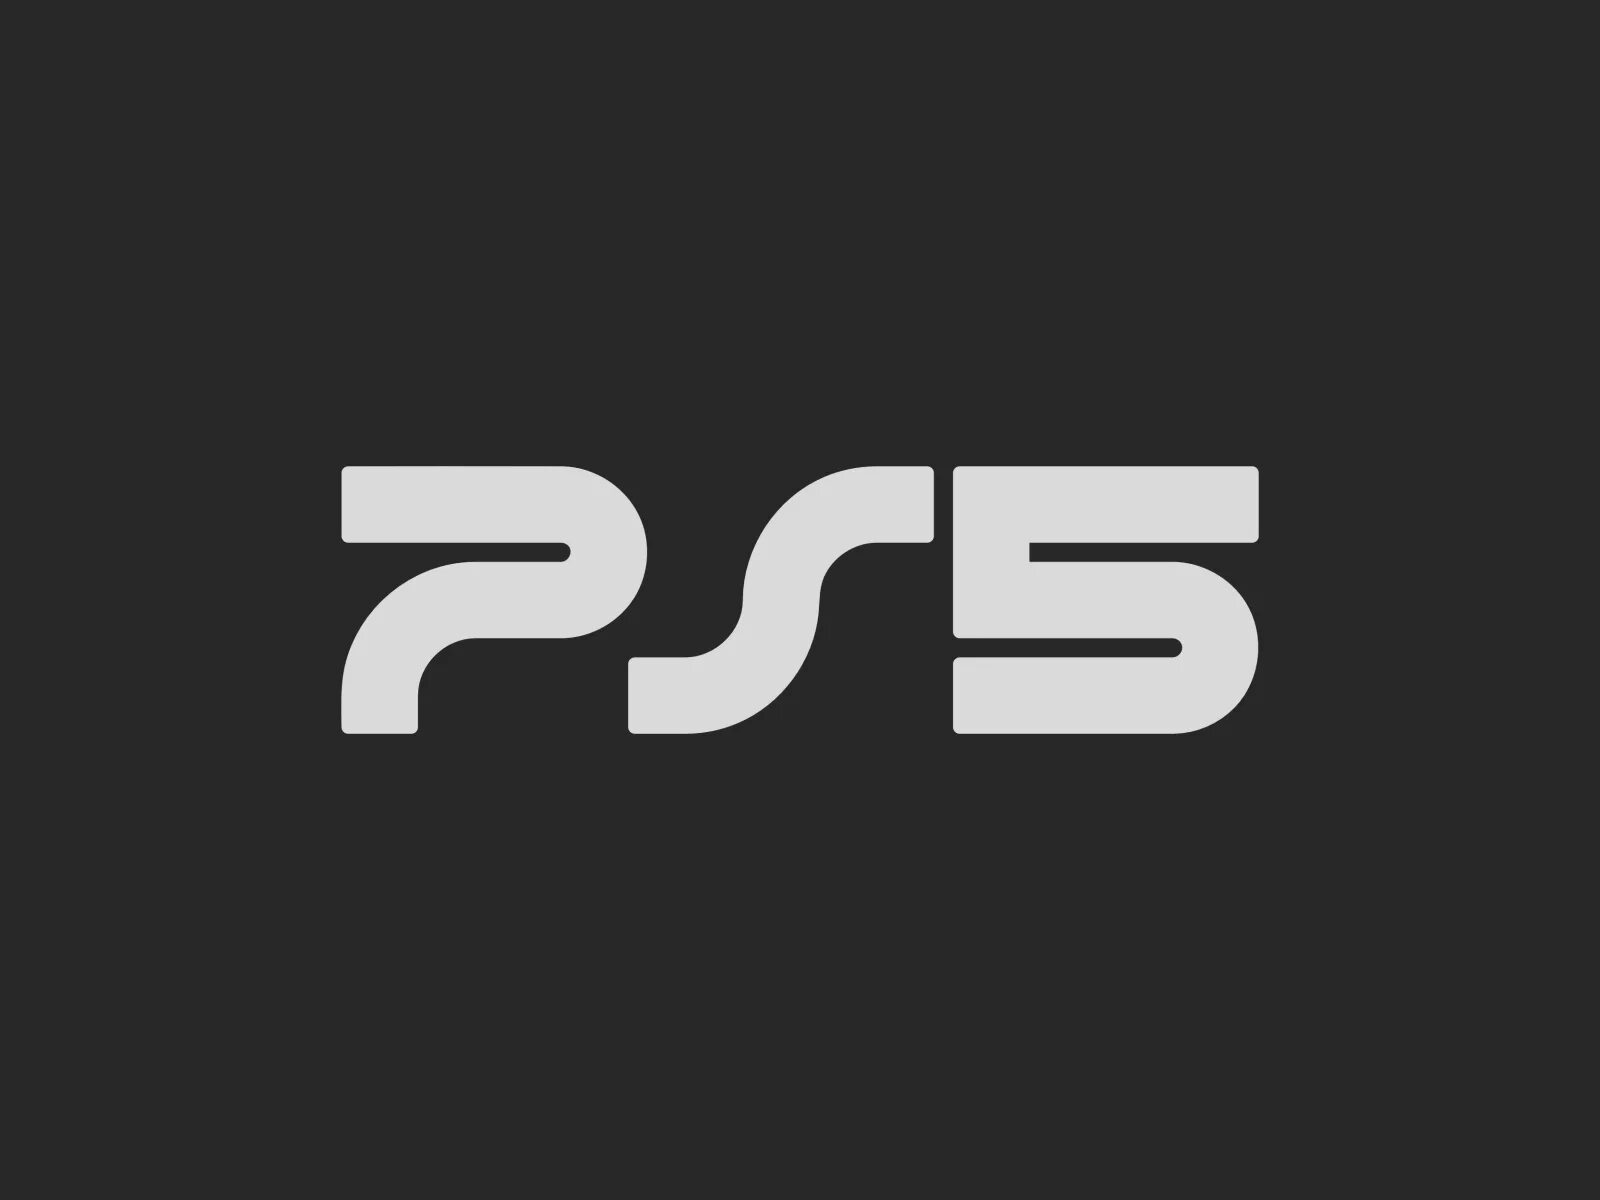 Ps5 клуб. Ps5 logo. PS логотип. PLAYSTATION 5 логотип. Плейстейшен Файв.